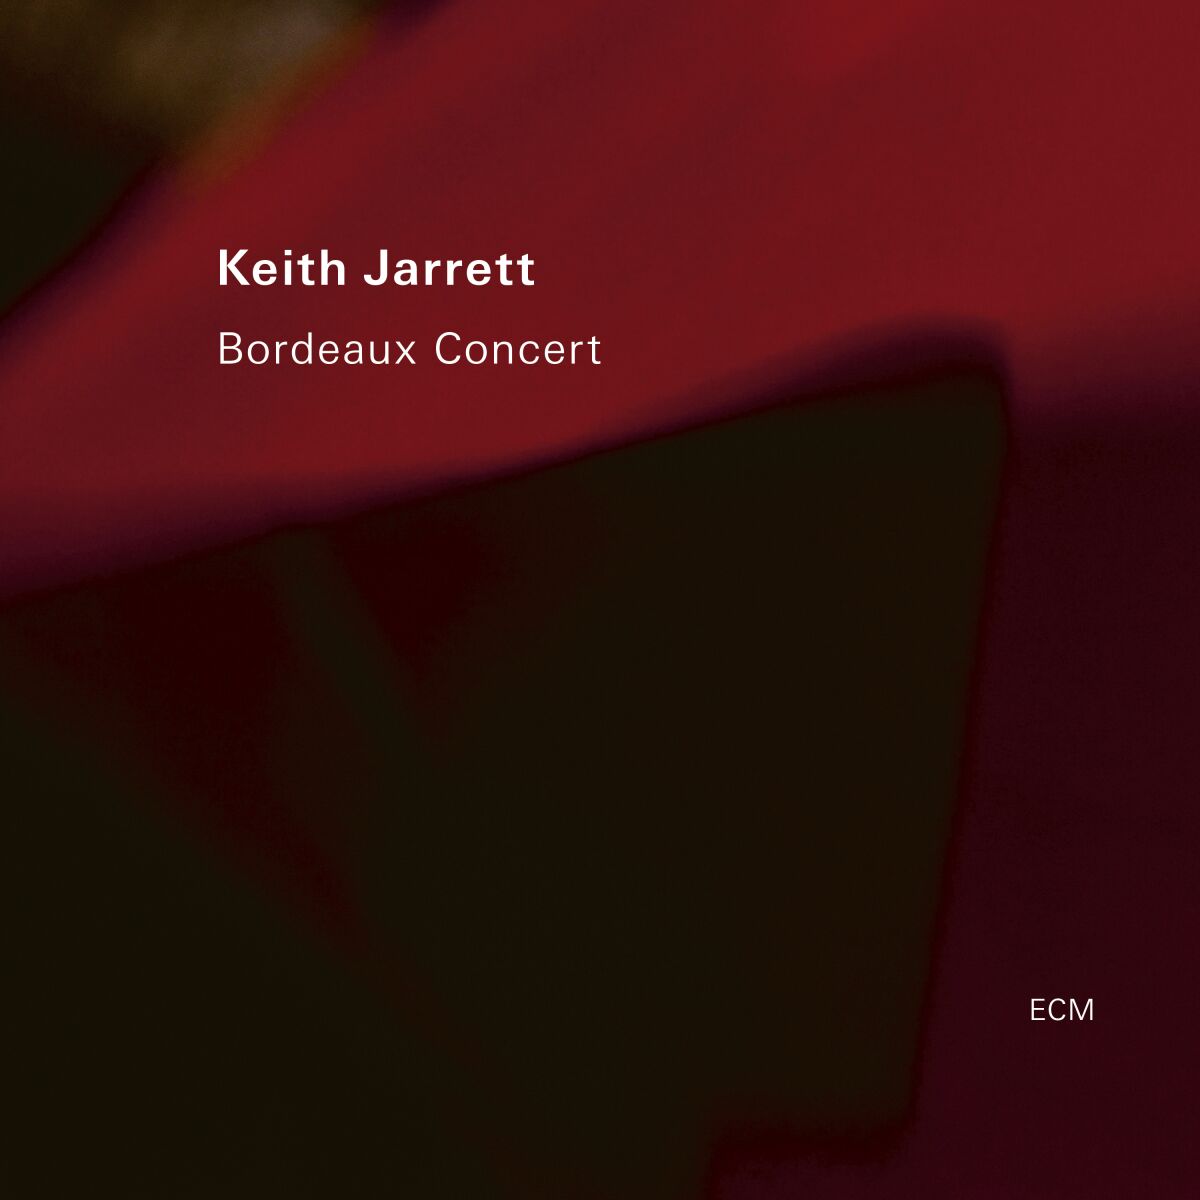 This cover image released by ECM Records shows "Bordeaux Concert" by Keith Jarrett. (ECM Records via AP)